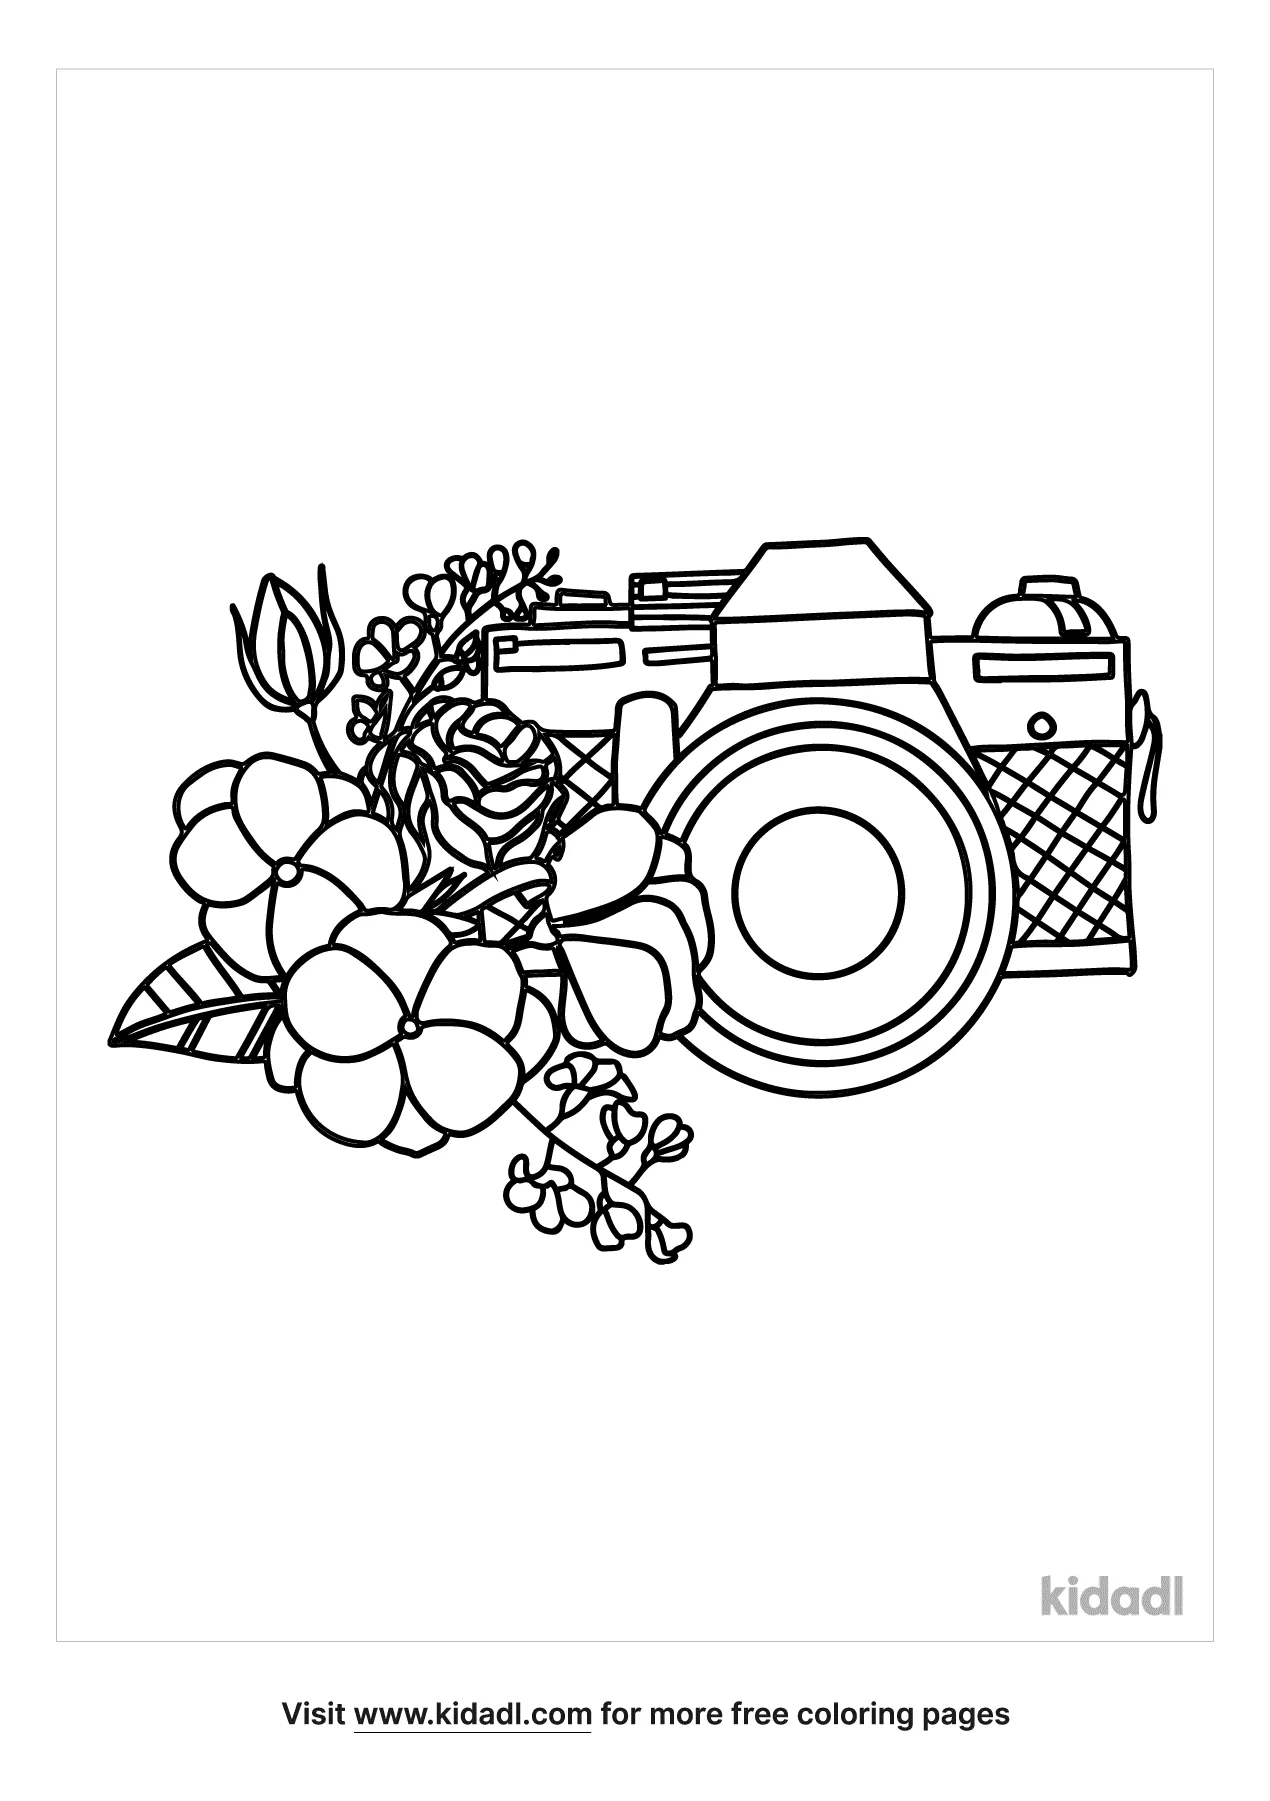 Free Floral Camera Coloring Page | Coloring Page Printables | Kidadl